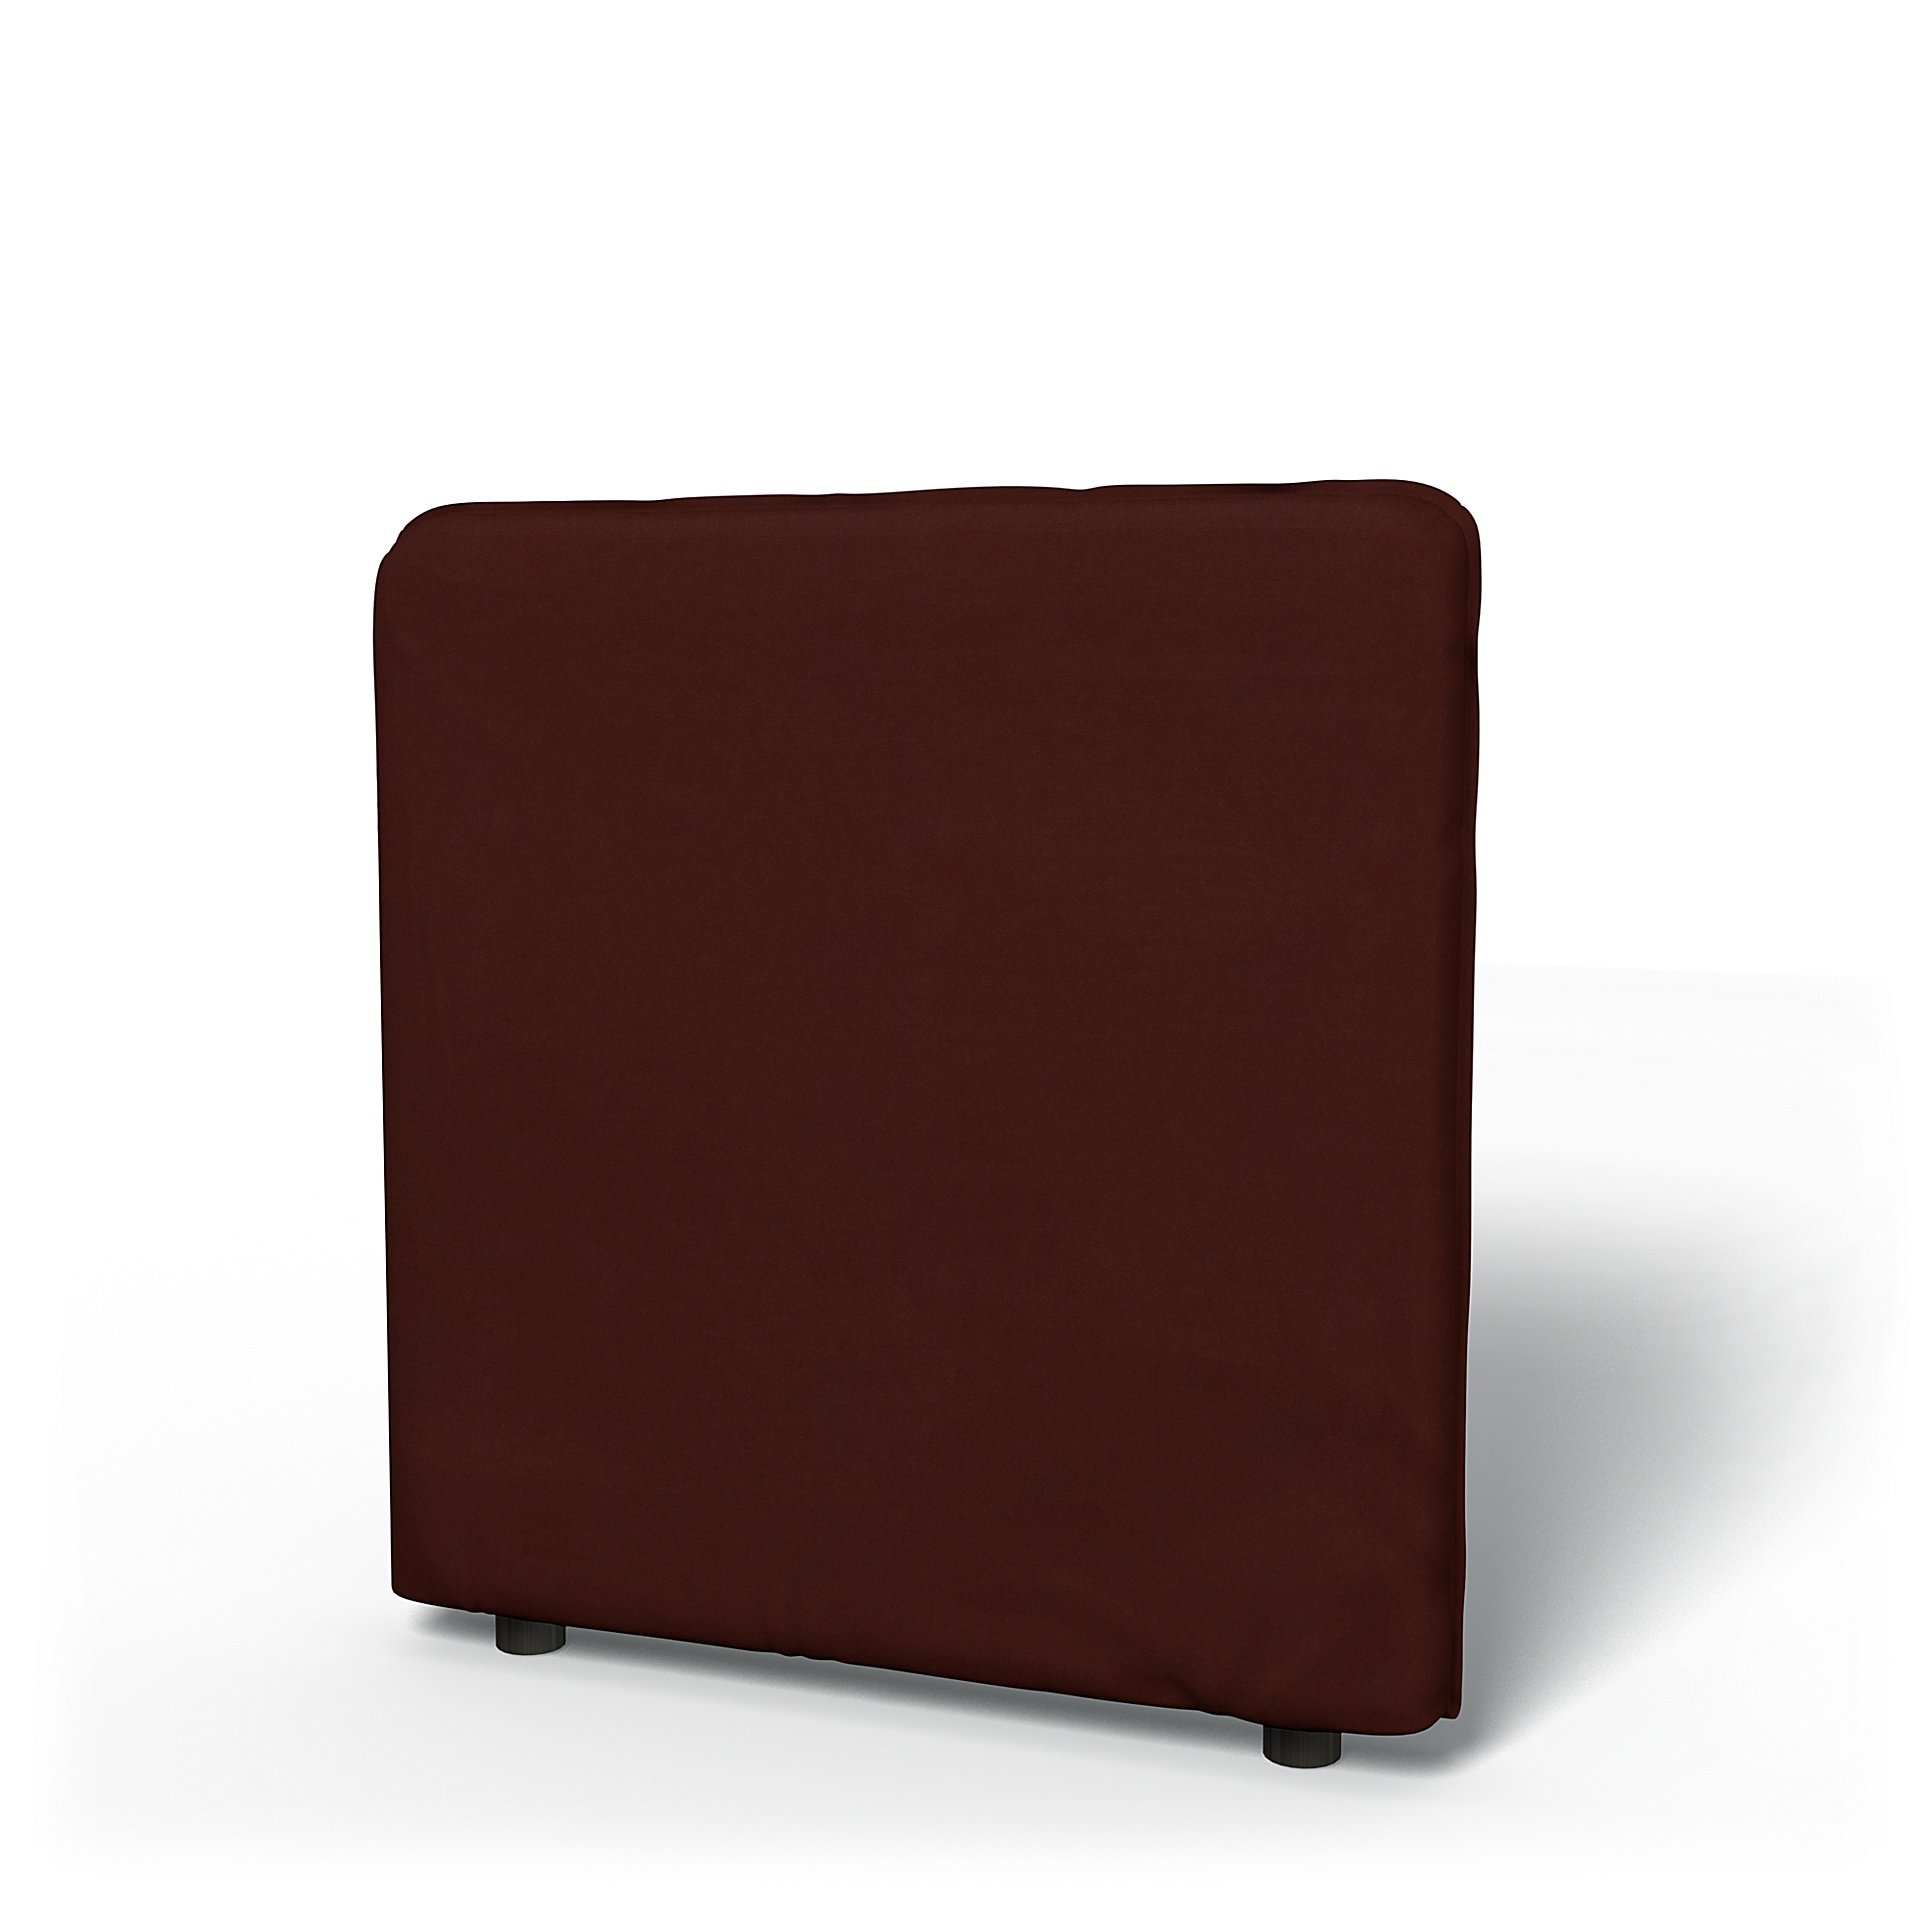 IKEA - Vallentuna Low Backrest Cover 80x80cm 32x32in, Ground Coffee, Velvet - Bemz